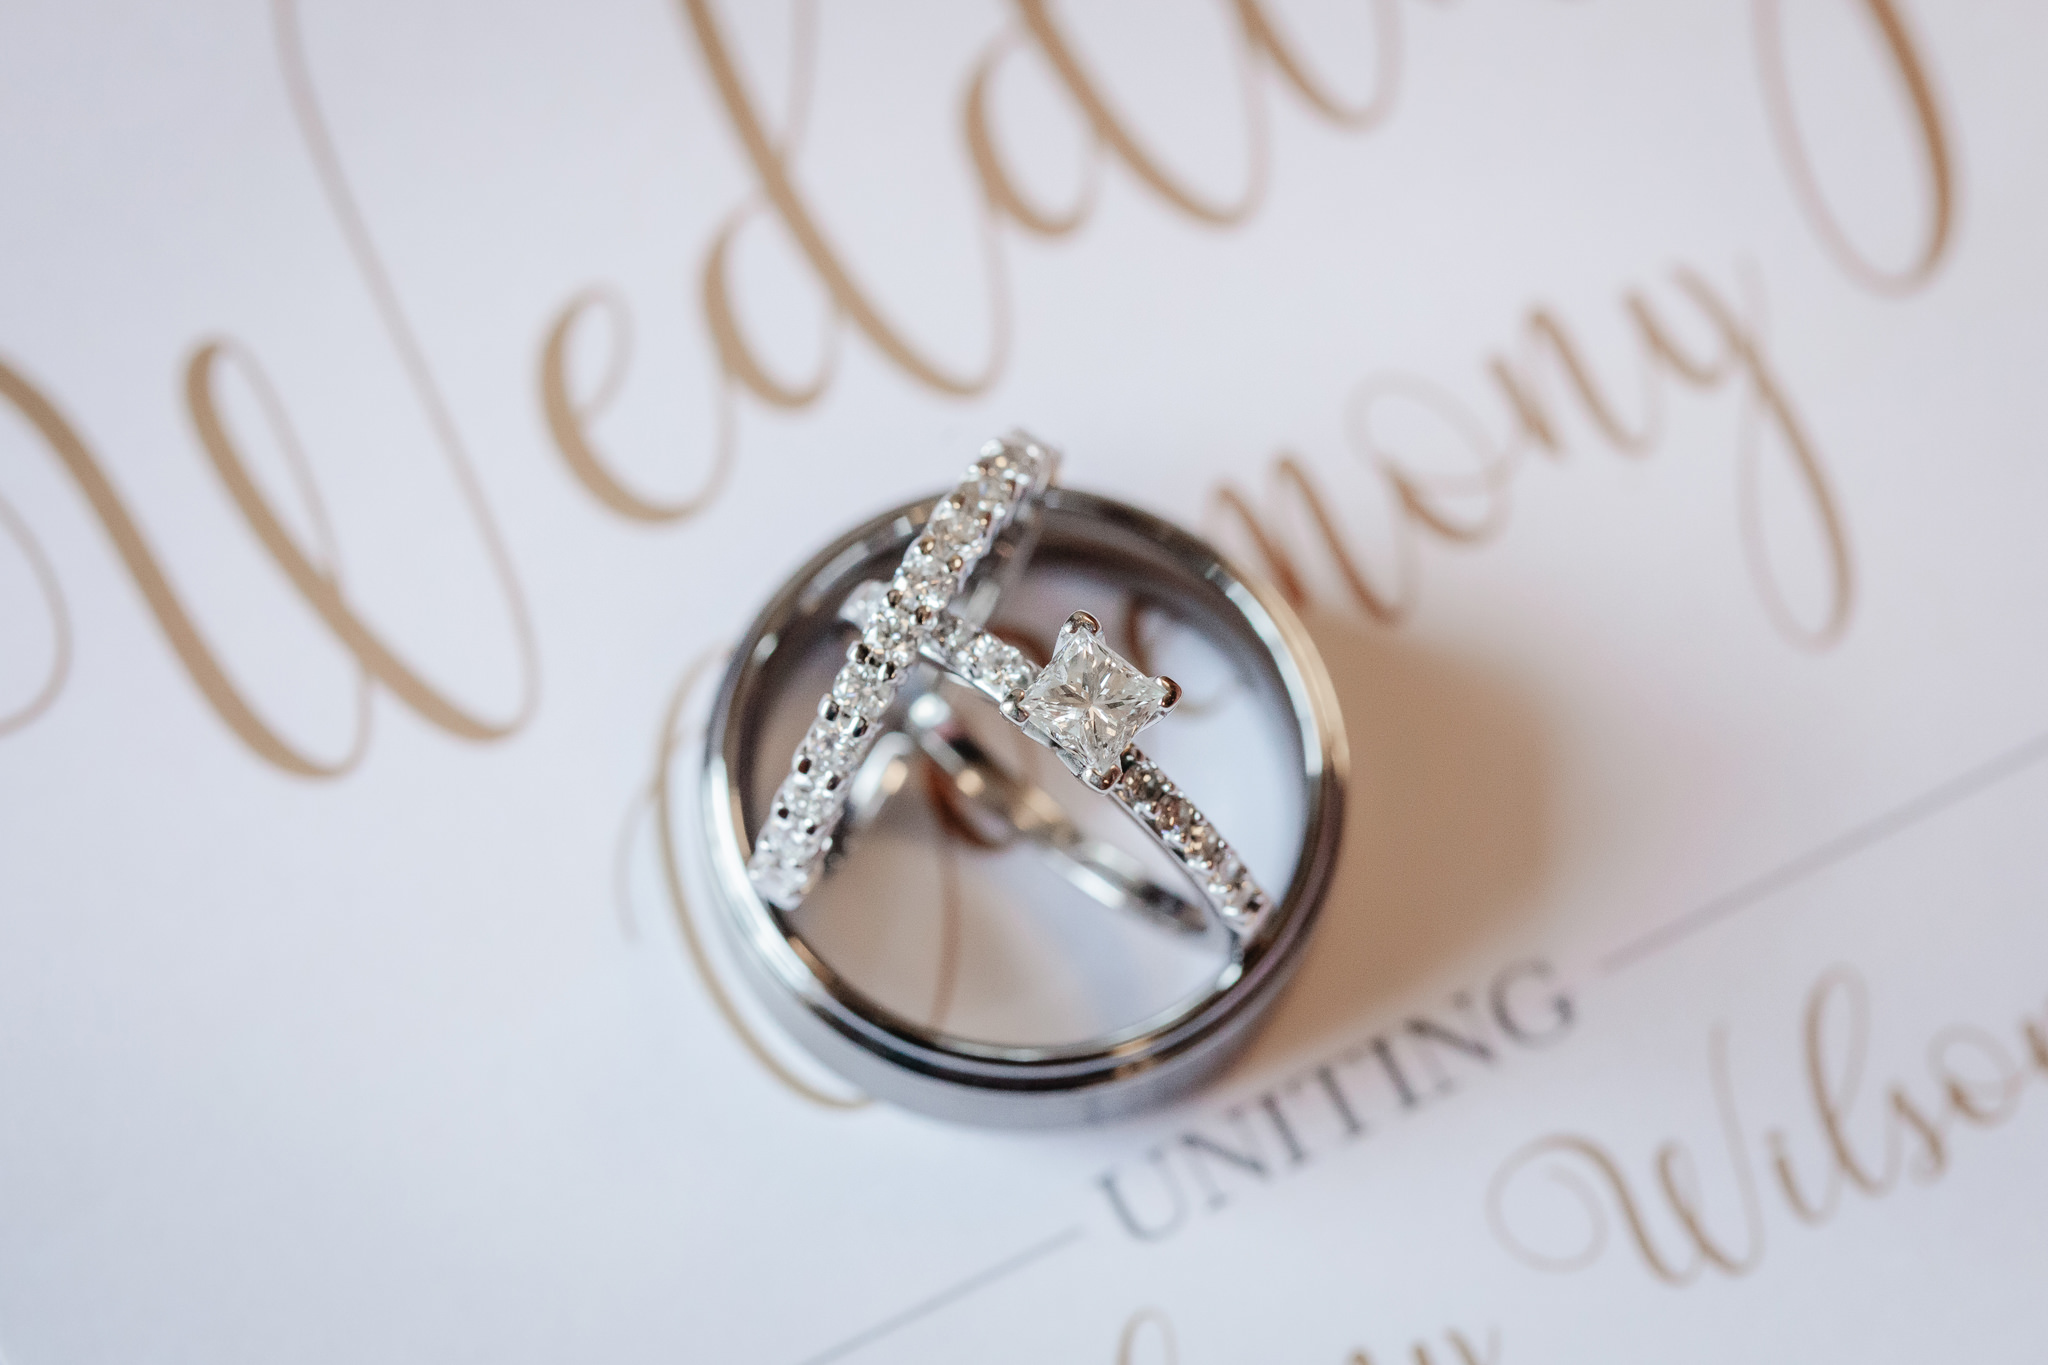 Overhead view of diamond wedding rings